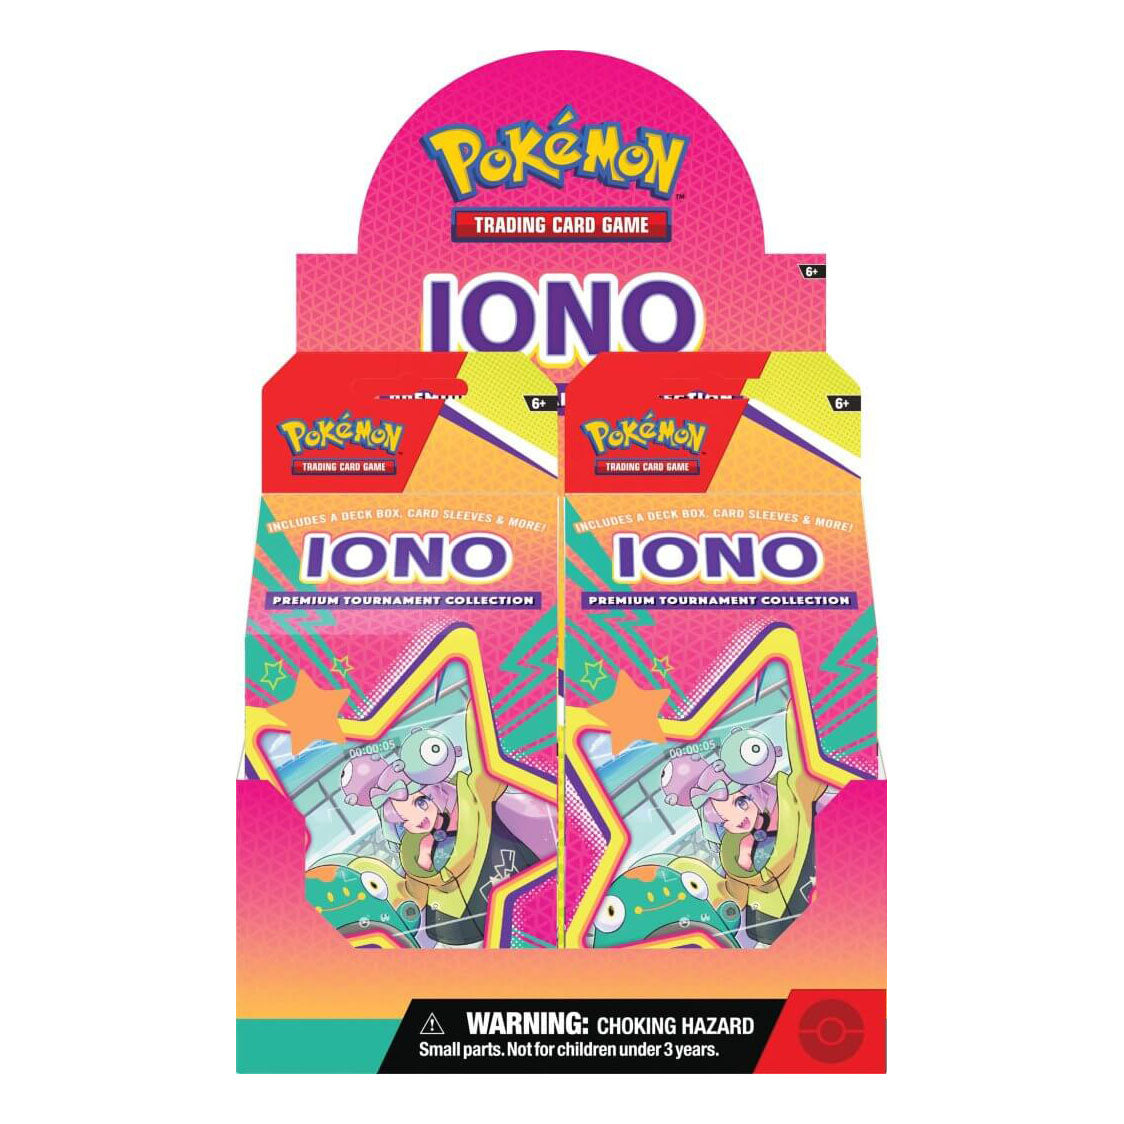 Pokemon TCG - Iono Premium Tournament Collection